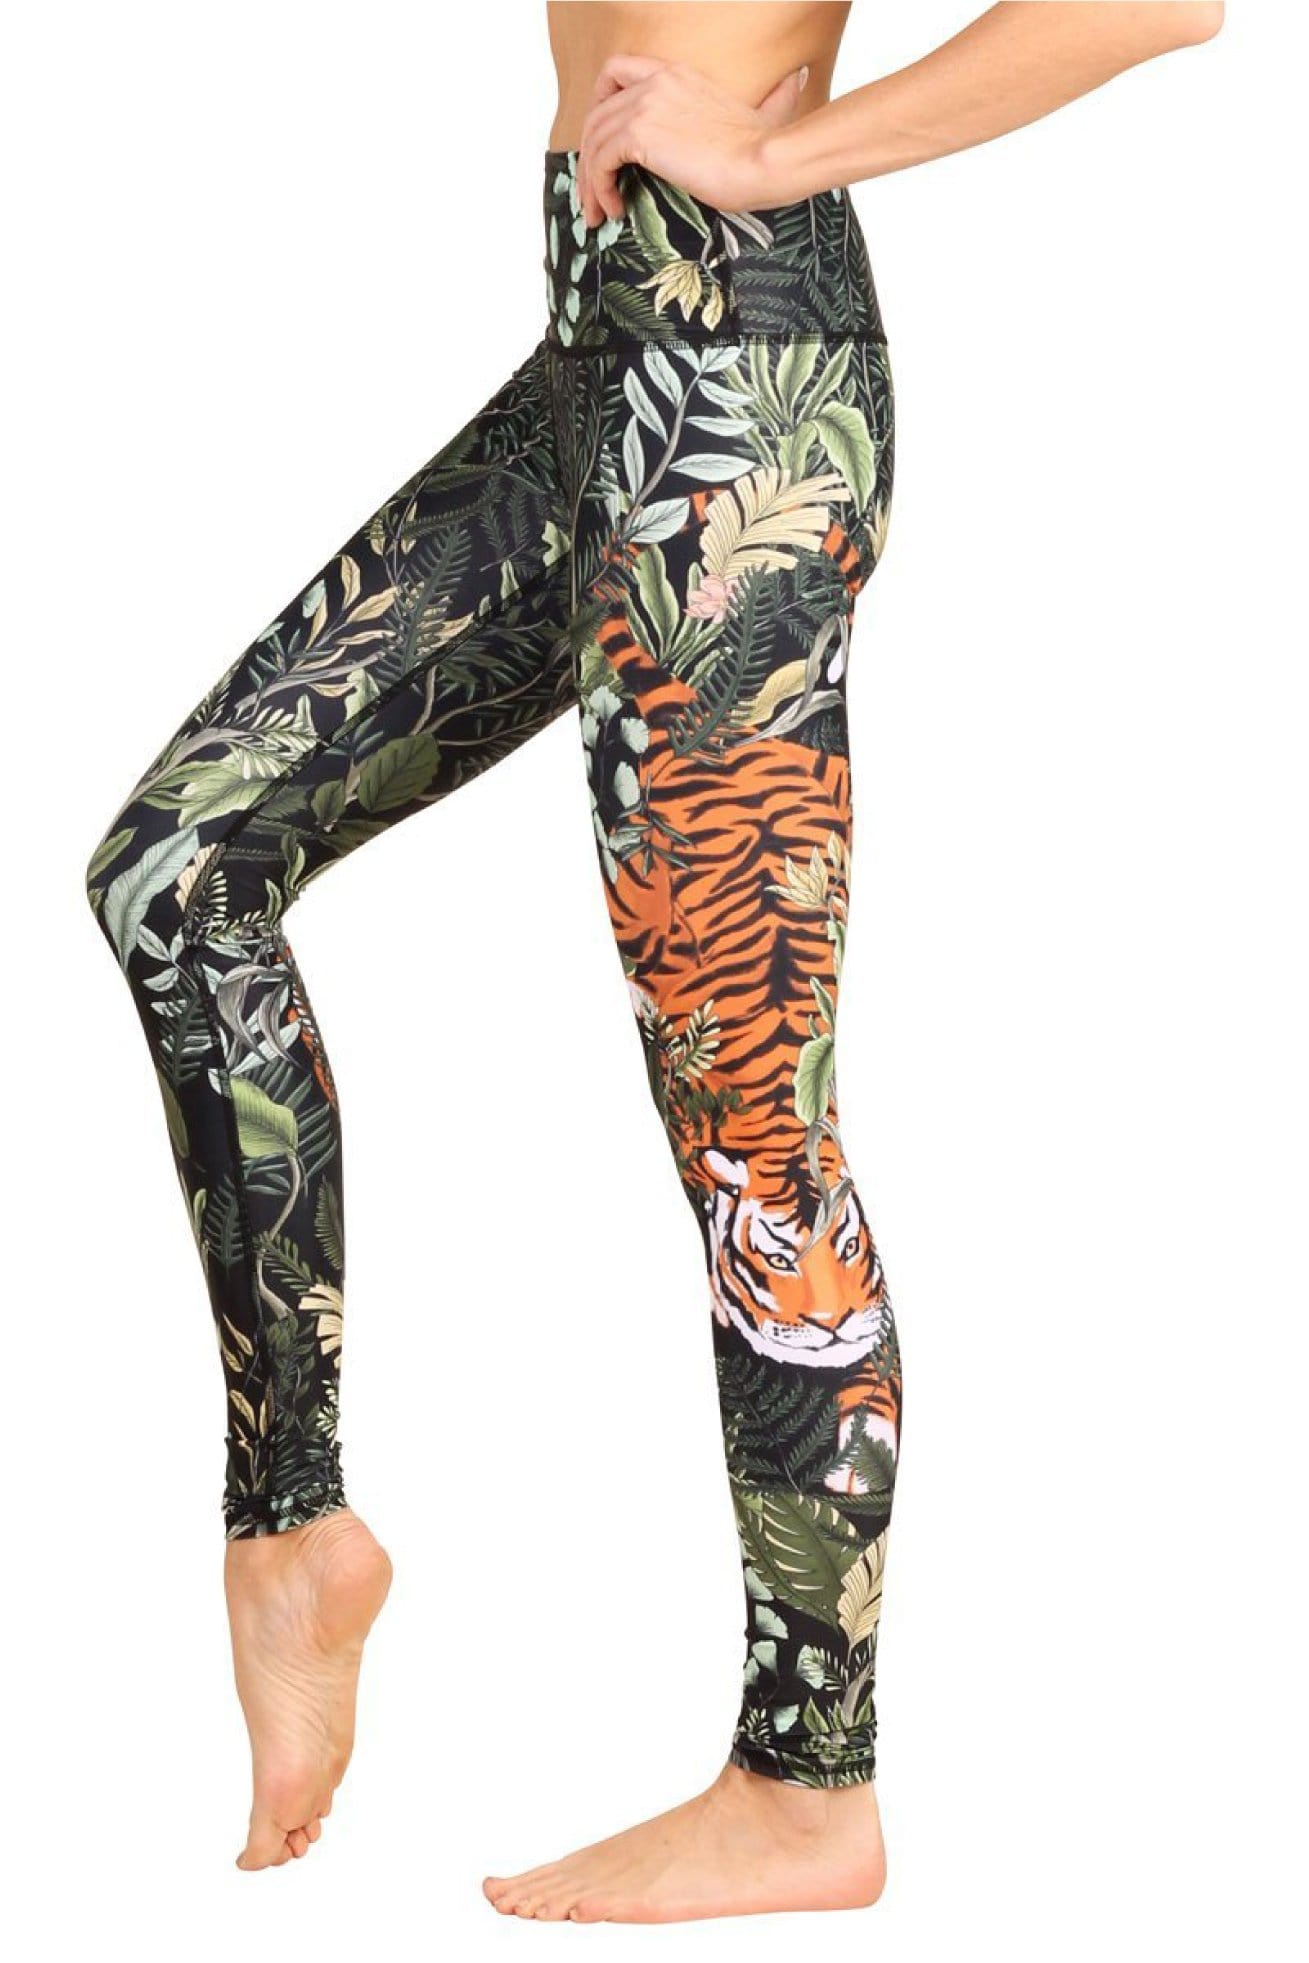 Floral Pattern Leggings Women Leggings Jungle Print Look Yoga and Athletic  Wear Jungle Look 